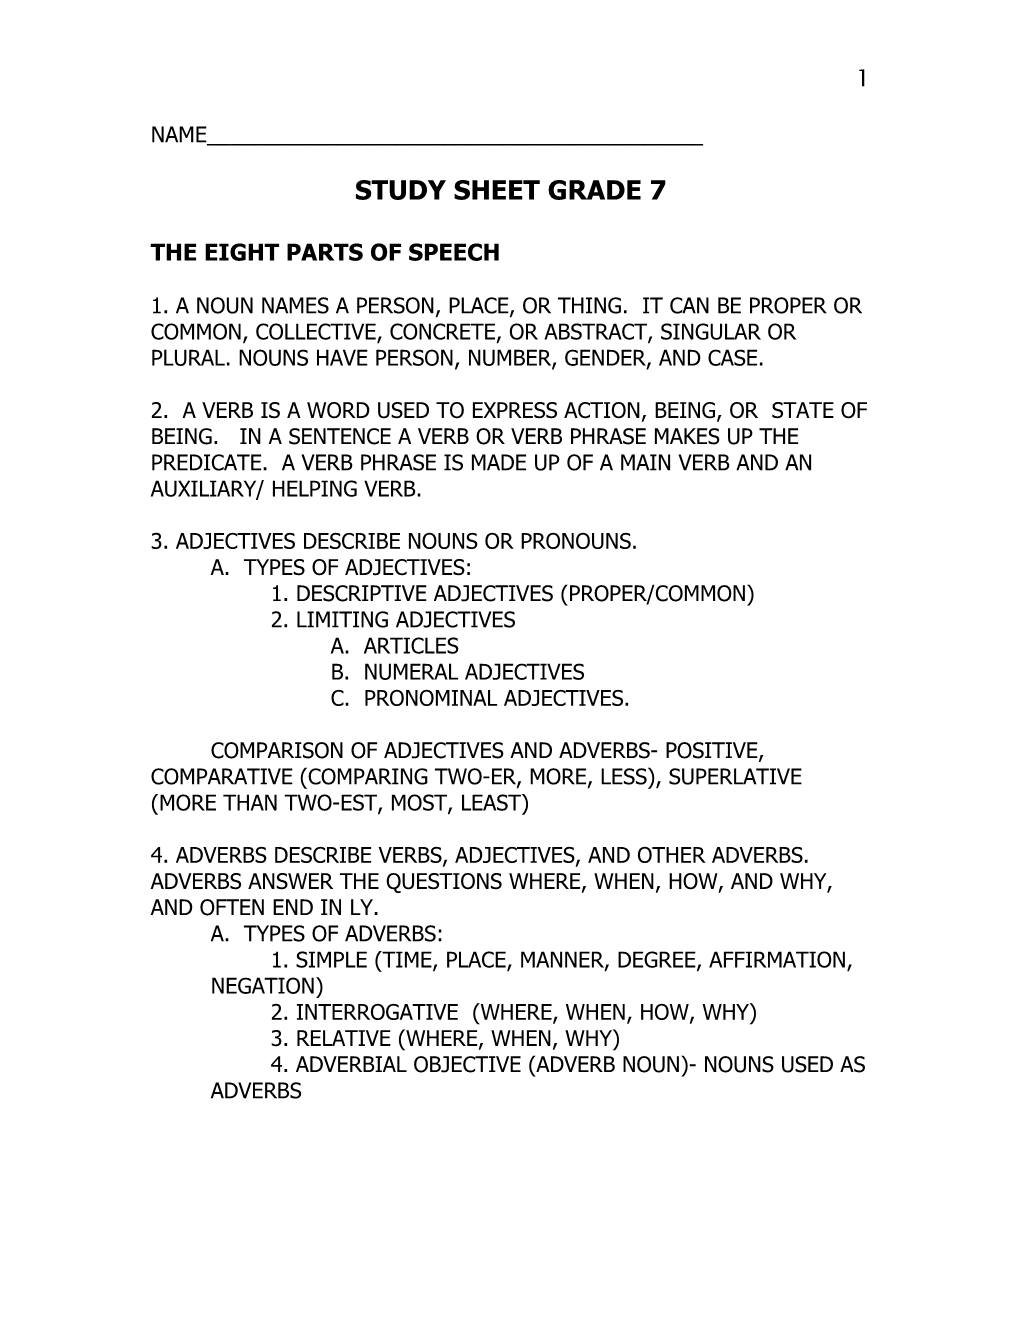 Name______ Study Sheet Grade 7